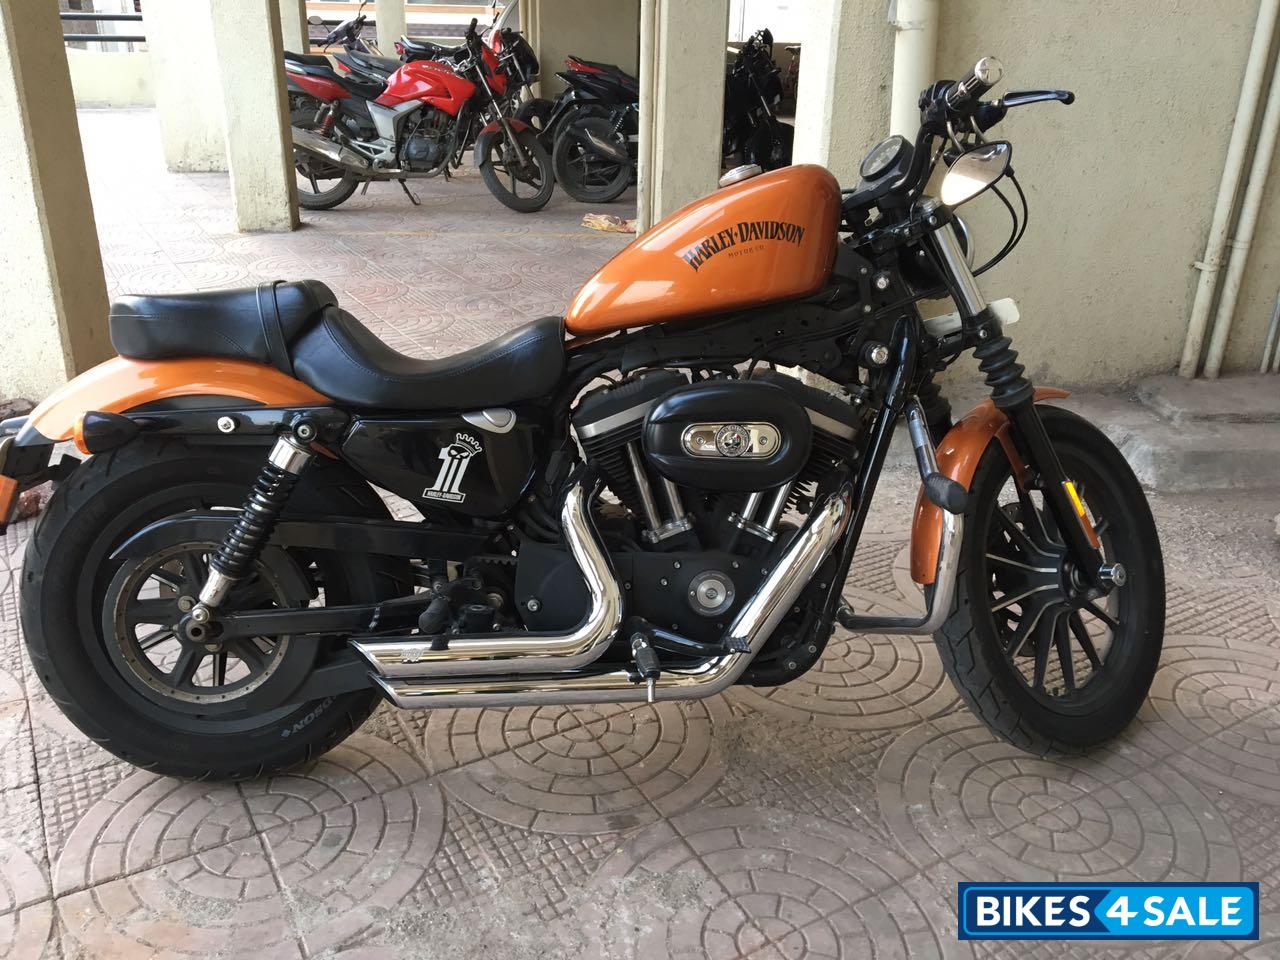 Harley Davidson Iron 883 Second Hand Price In Delhi Promotion Off61